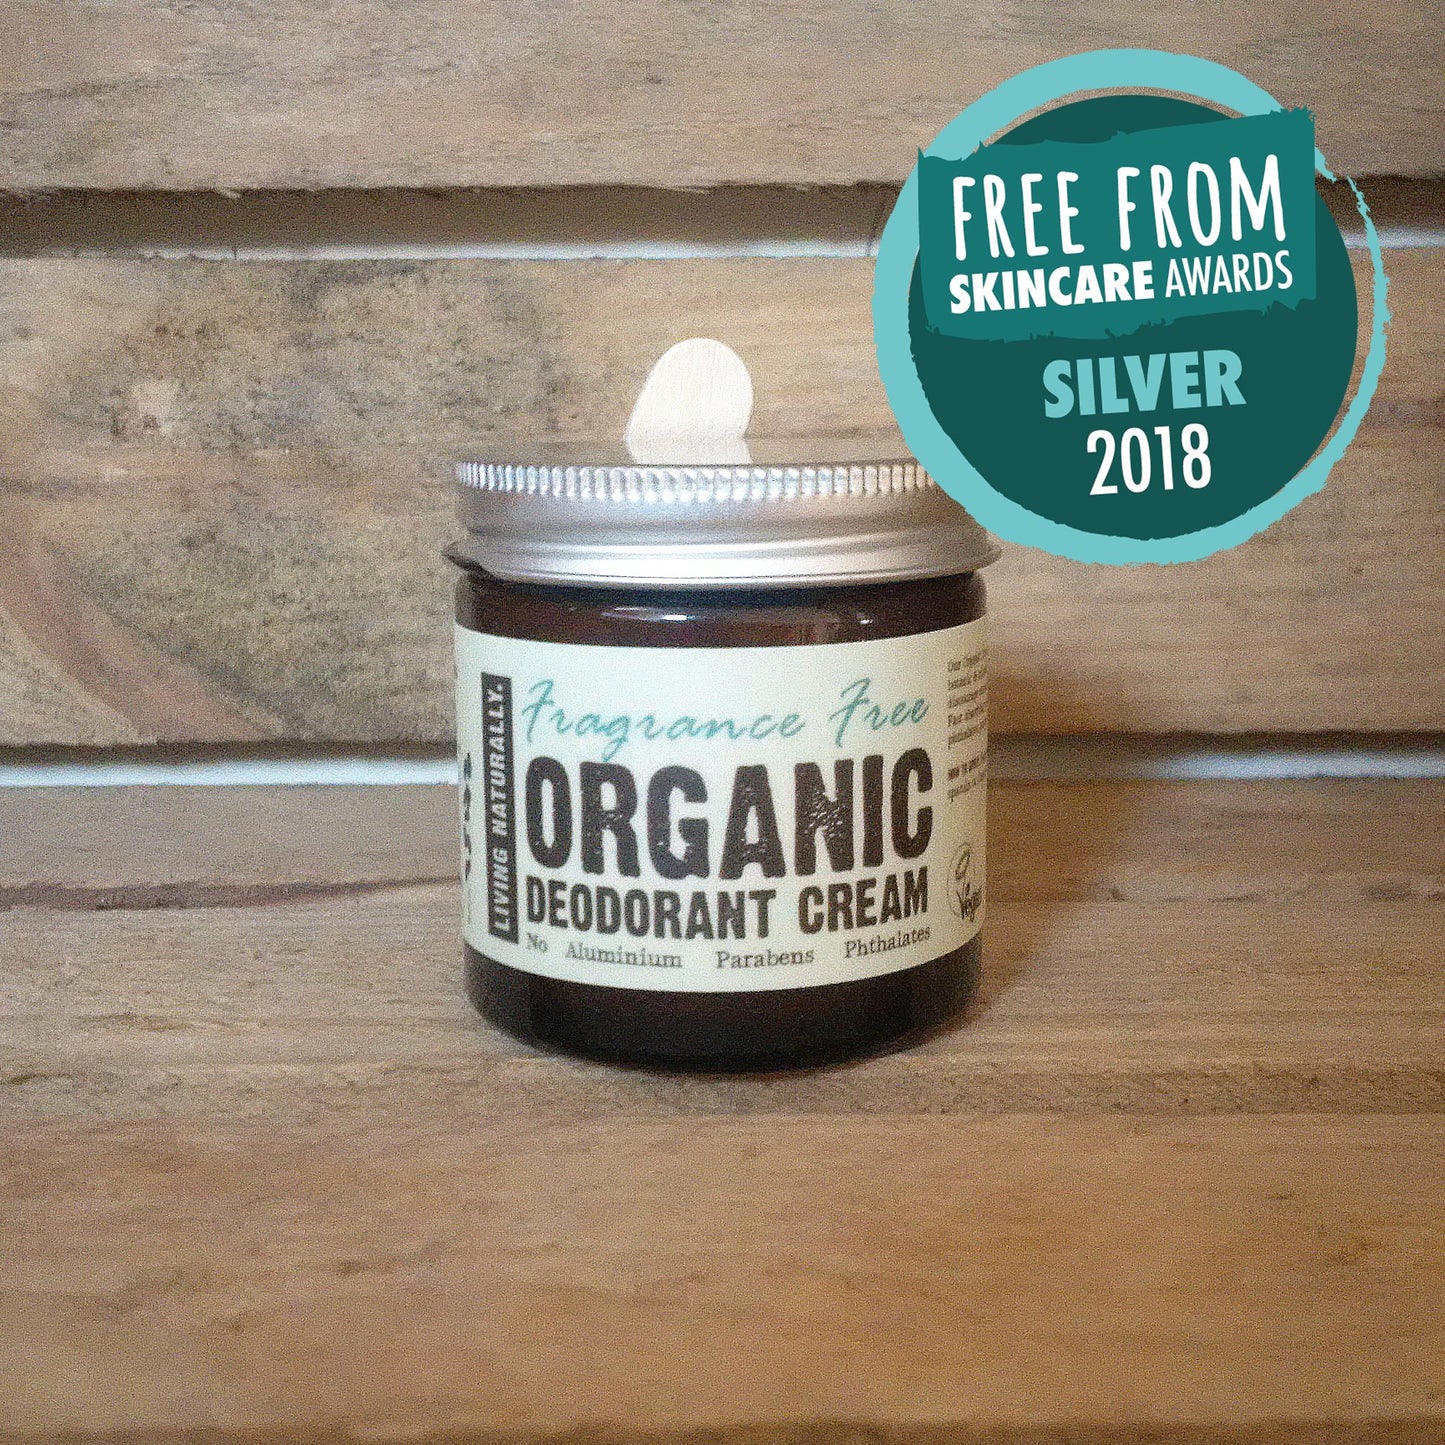 Fragrance Free Organic Deodorant